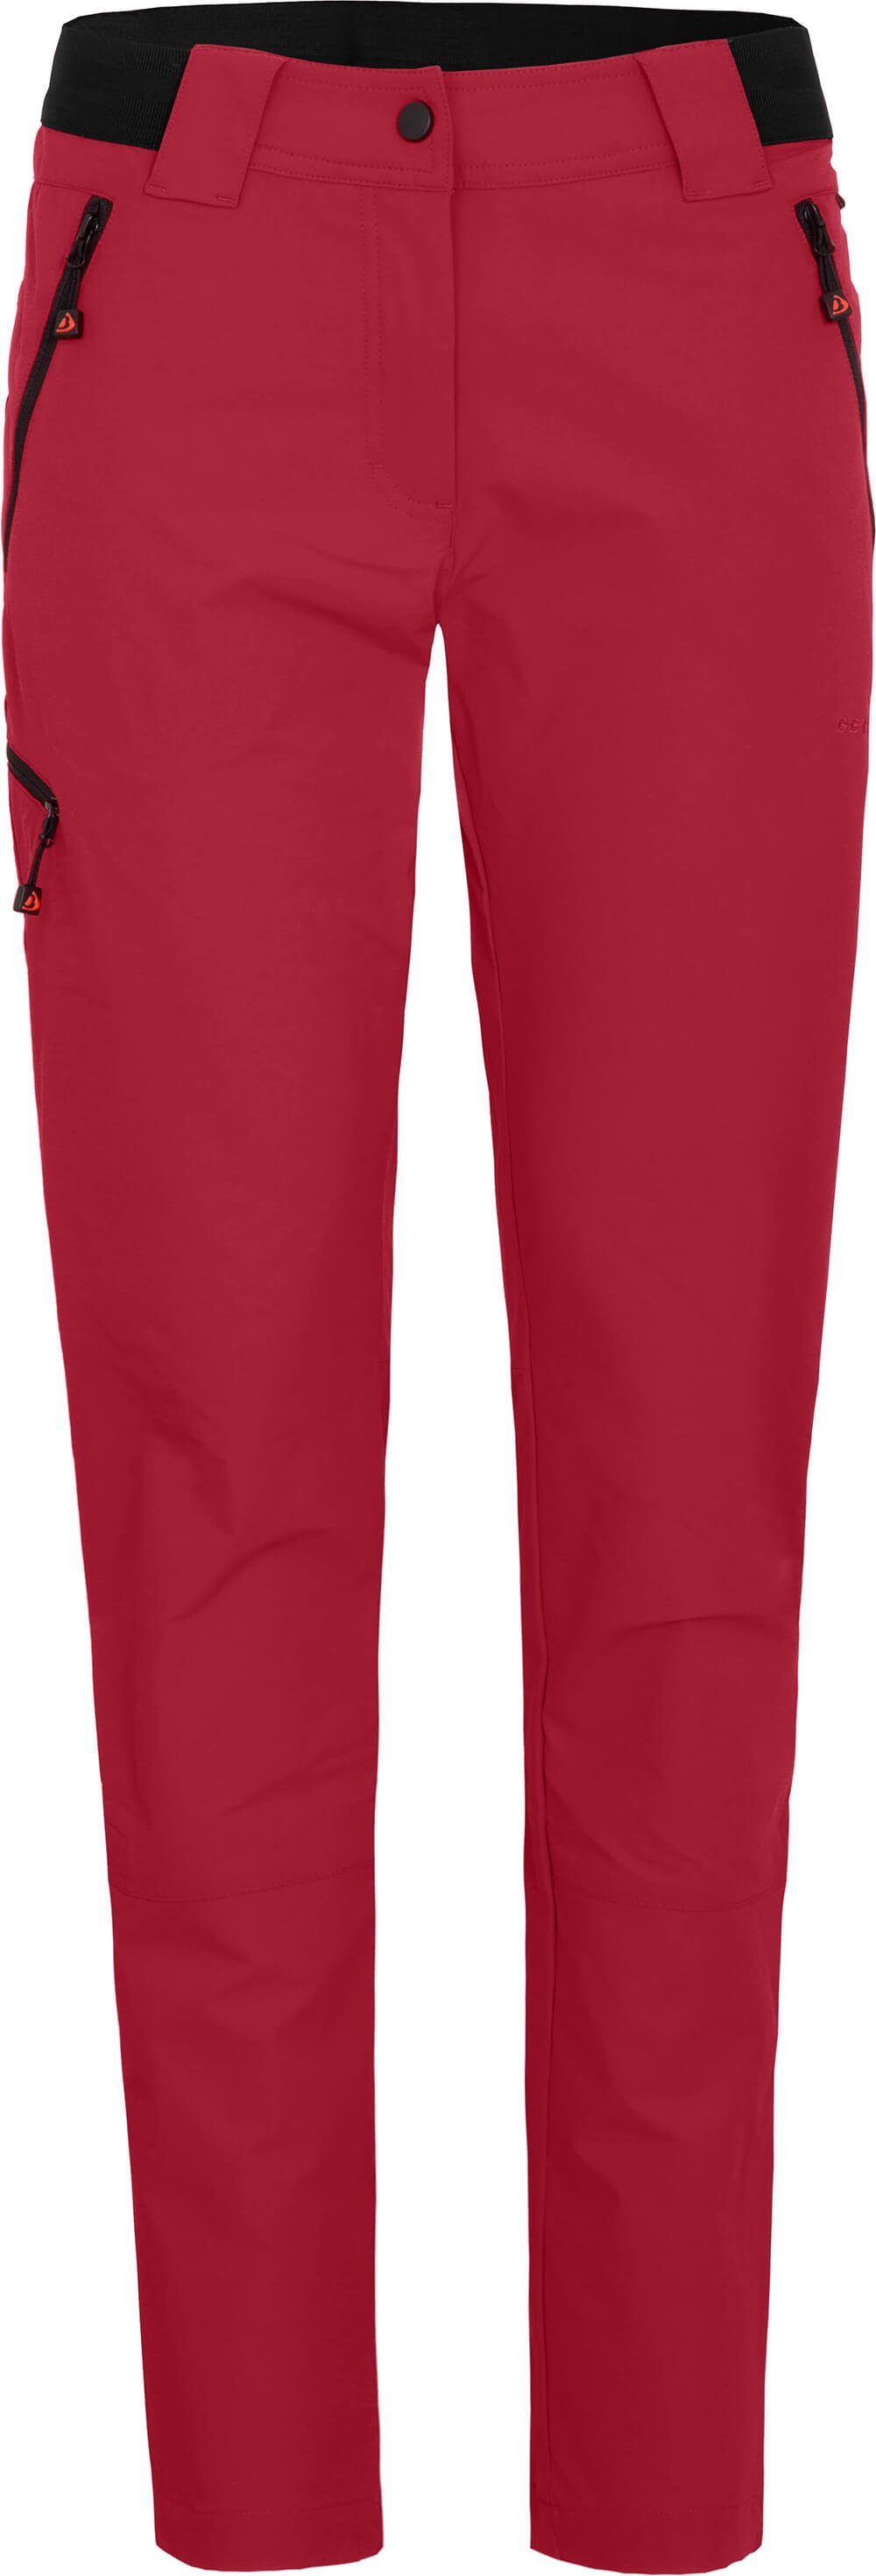 Bergson Outdoorhose VIDAA COMFORT (slim) Damen Wanderhose, leicht, strapazierfähig, Normalgrößen, rot | Outdoorhosen